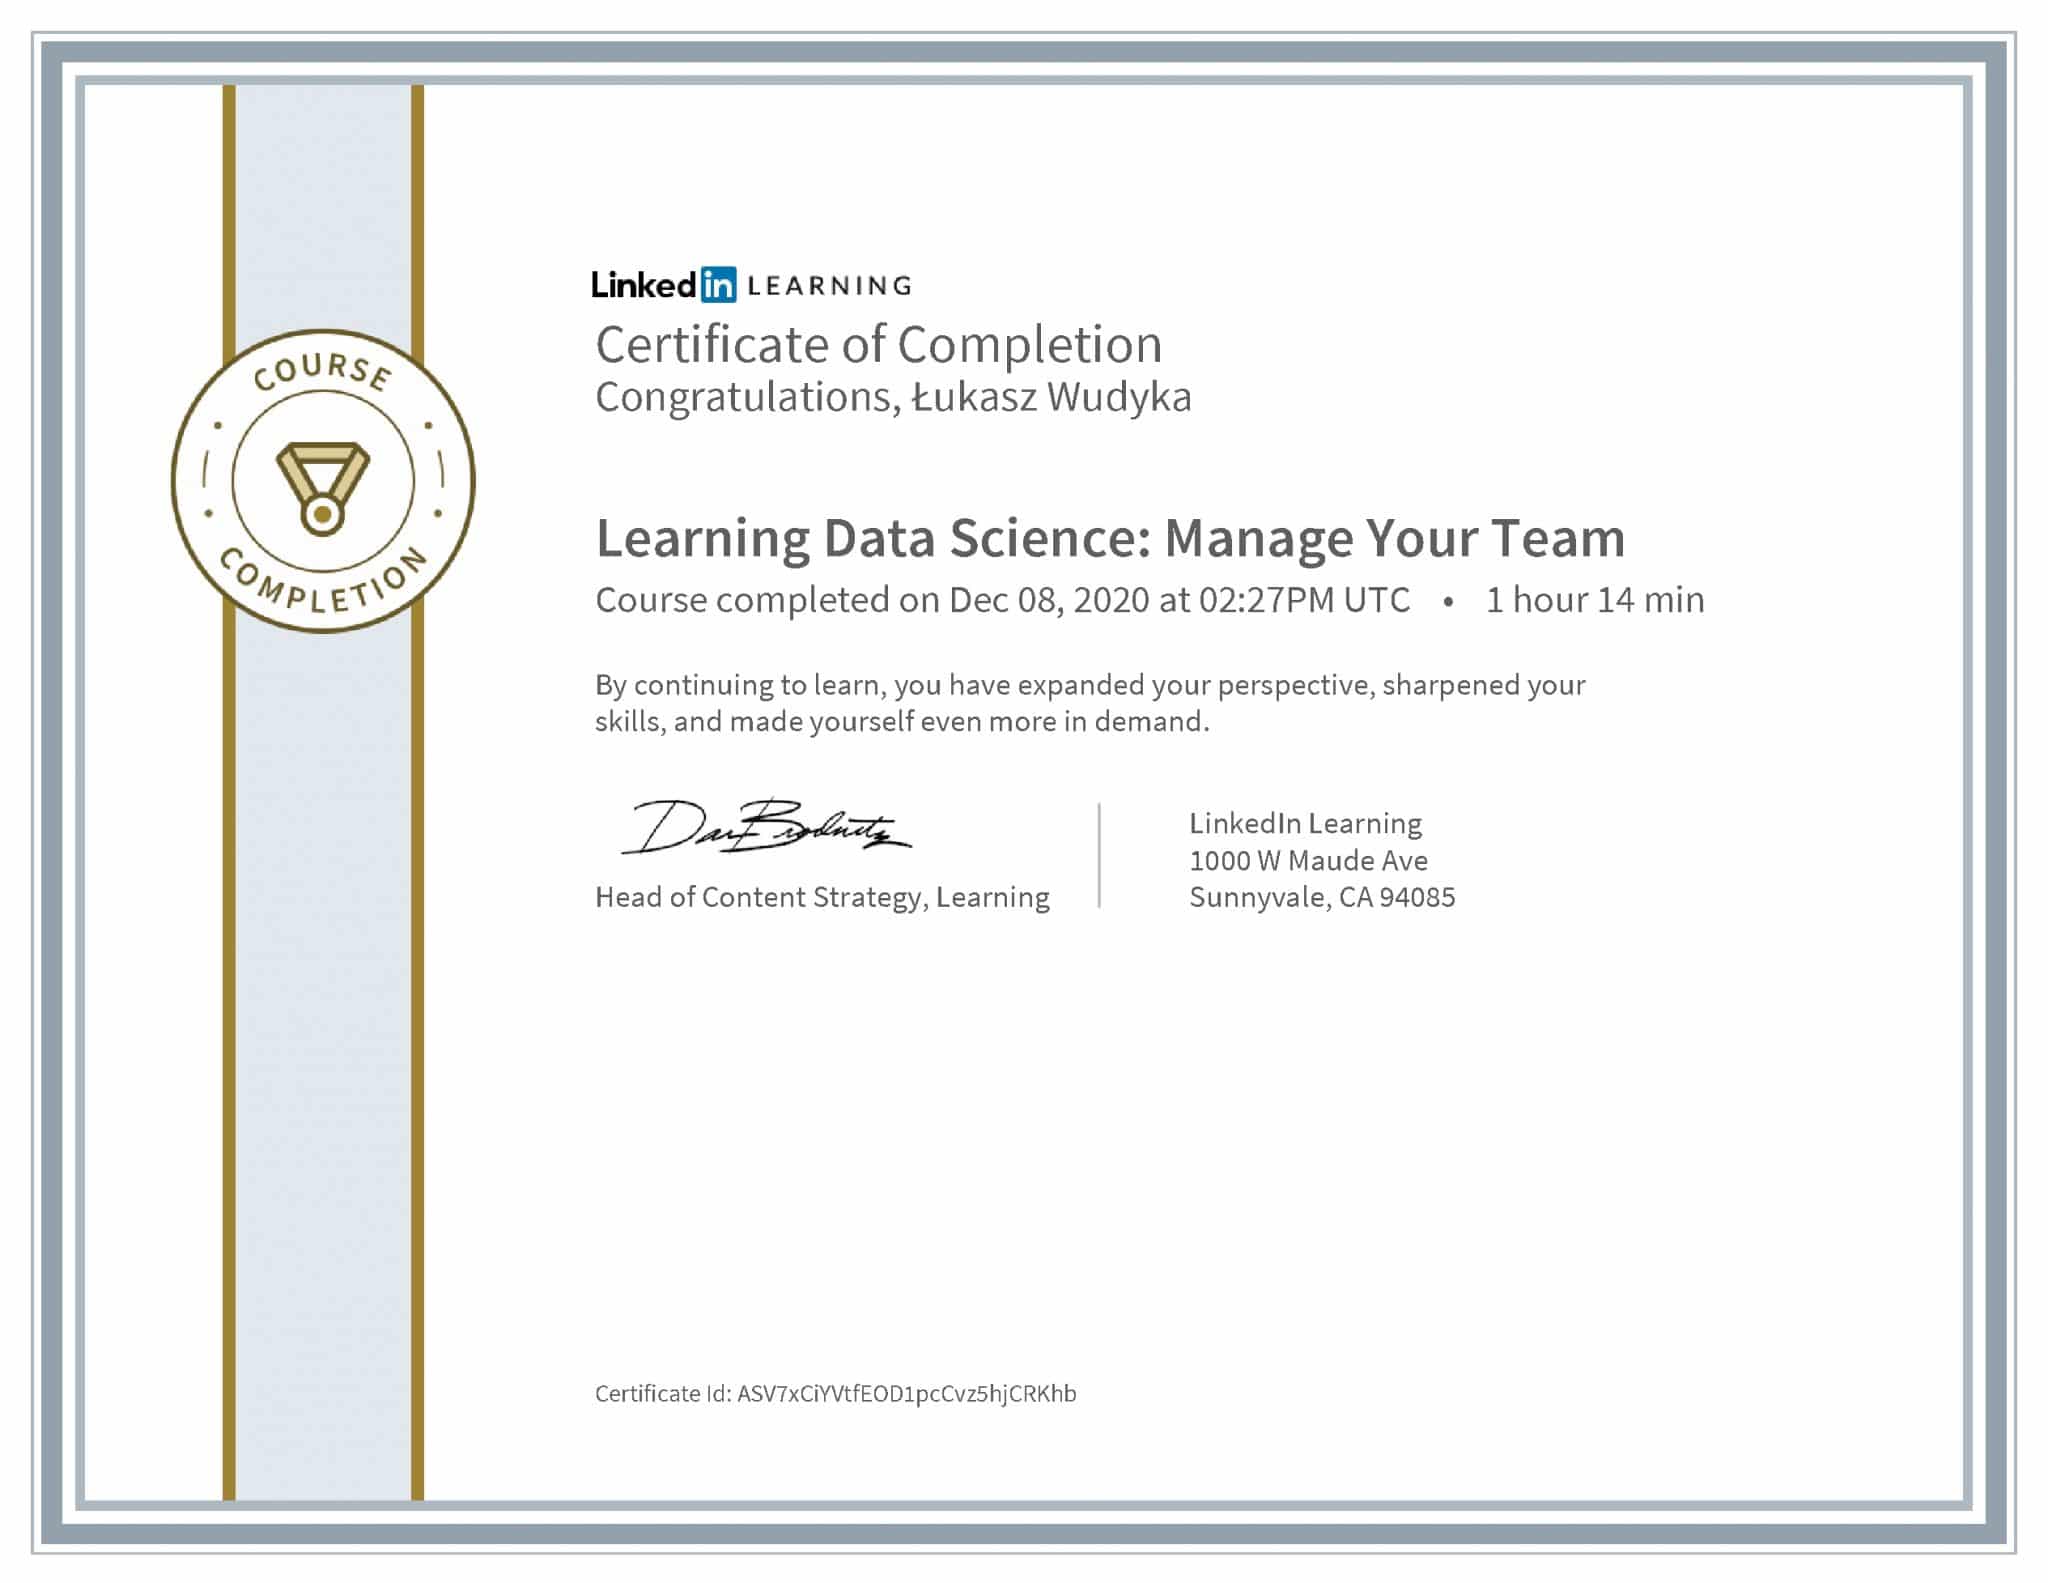 Łukasz Wudyka certyfikat LinkedIn Learning Data Science: Manage Your Team